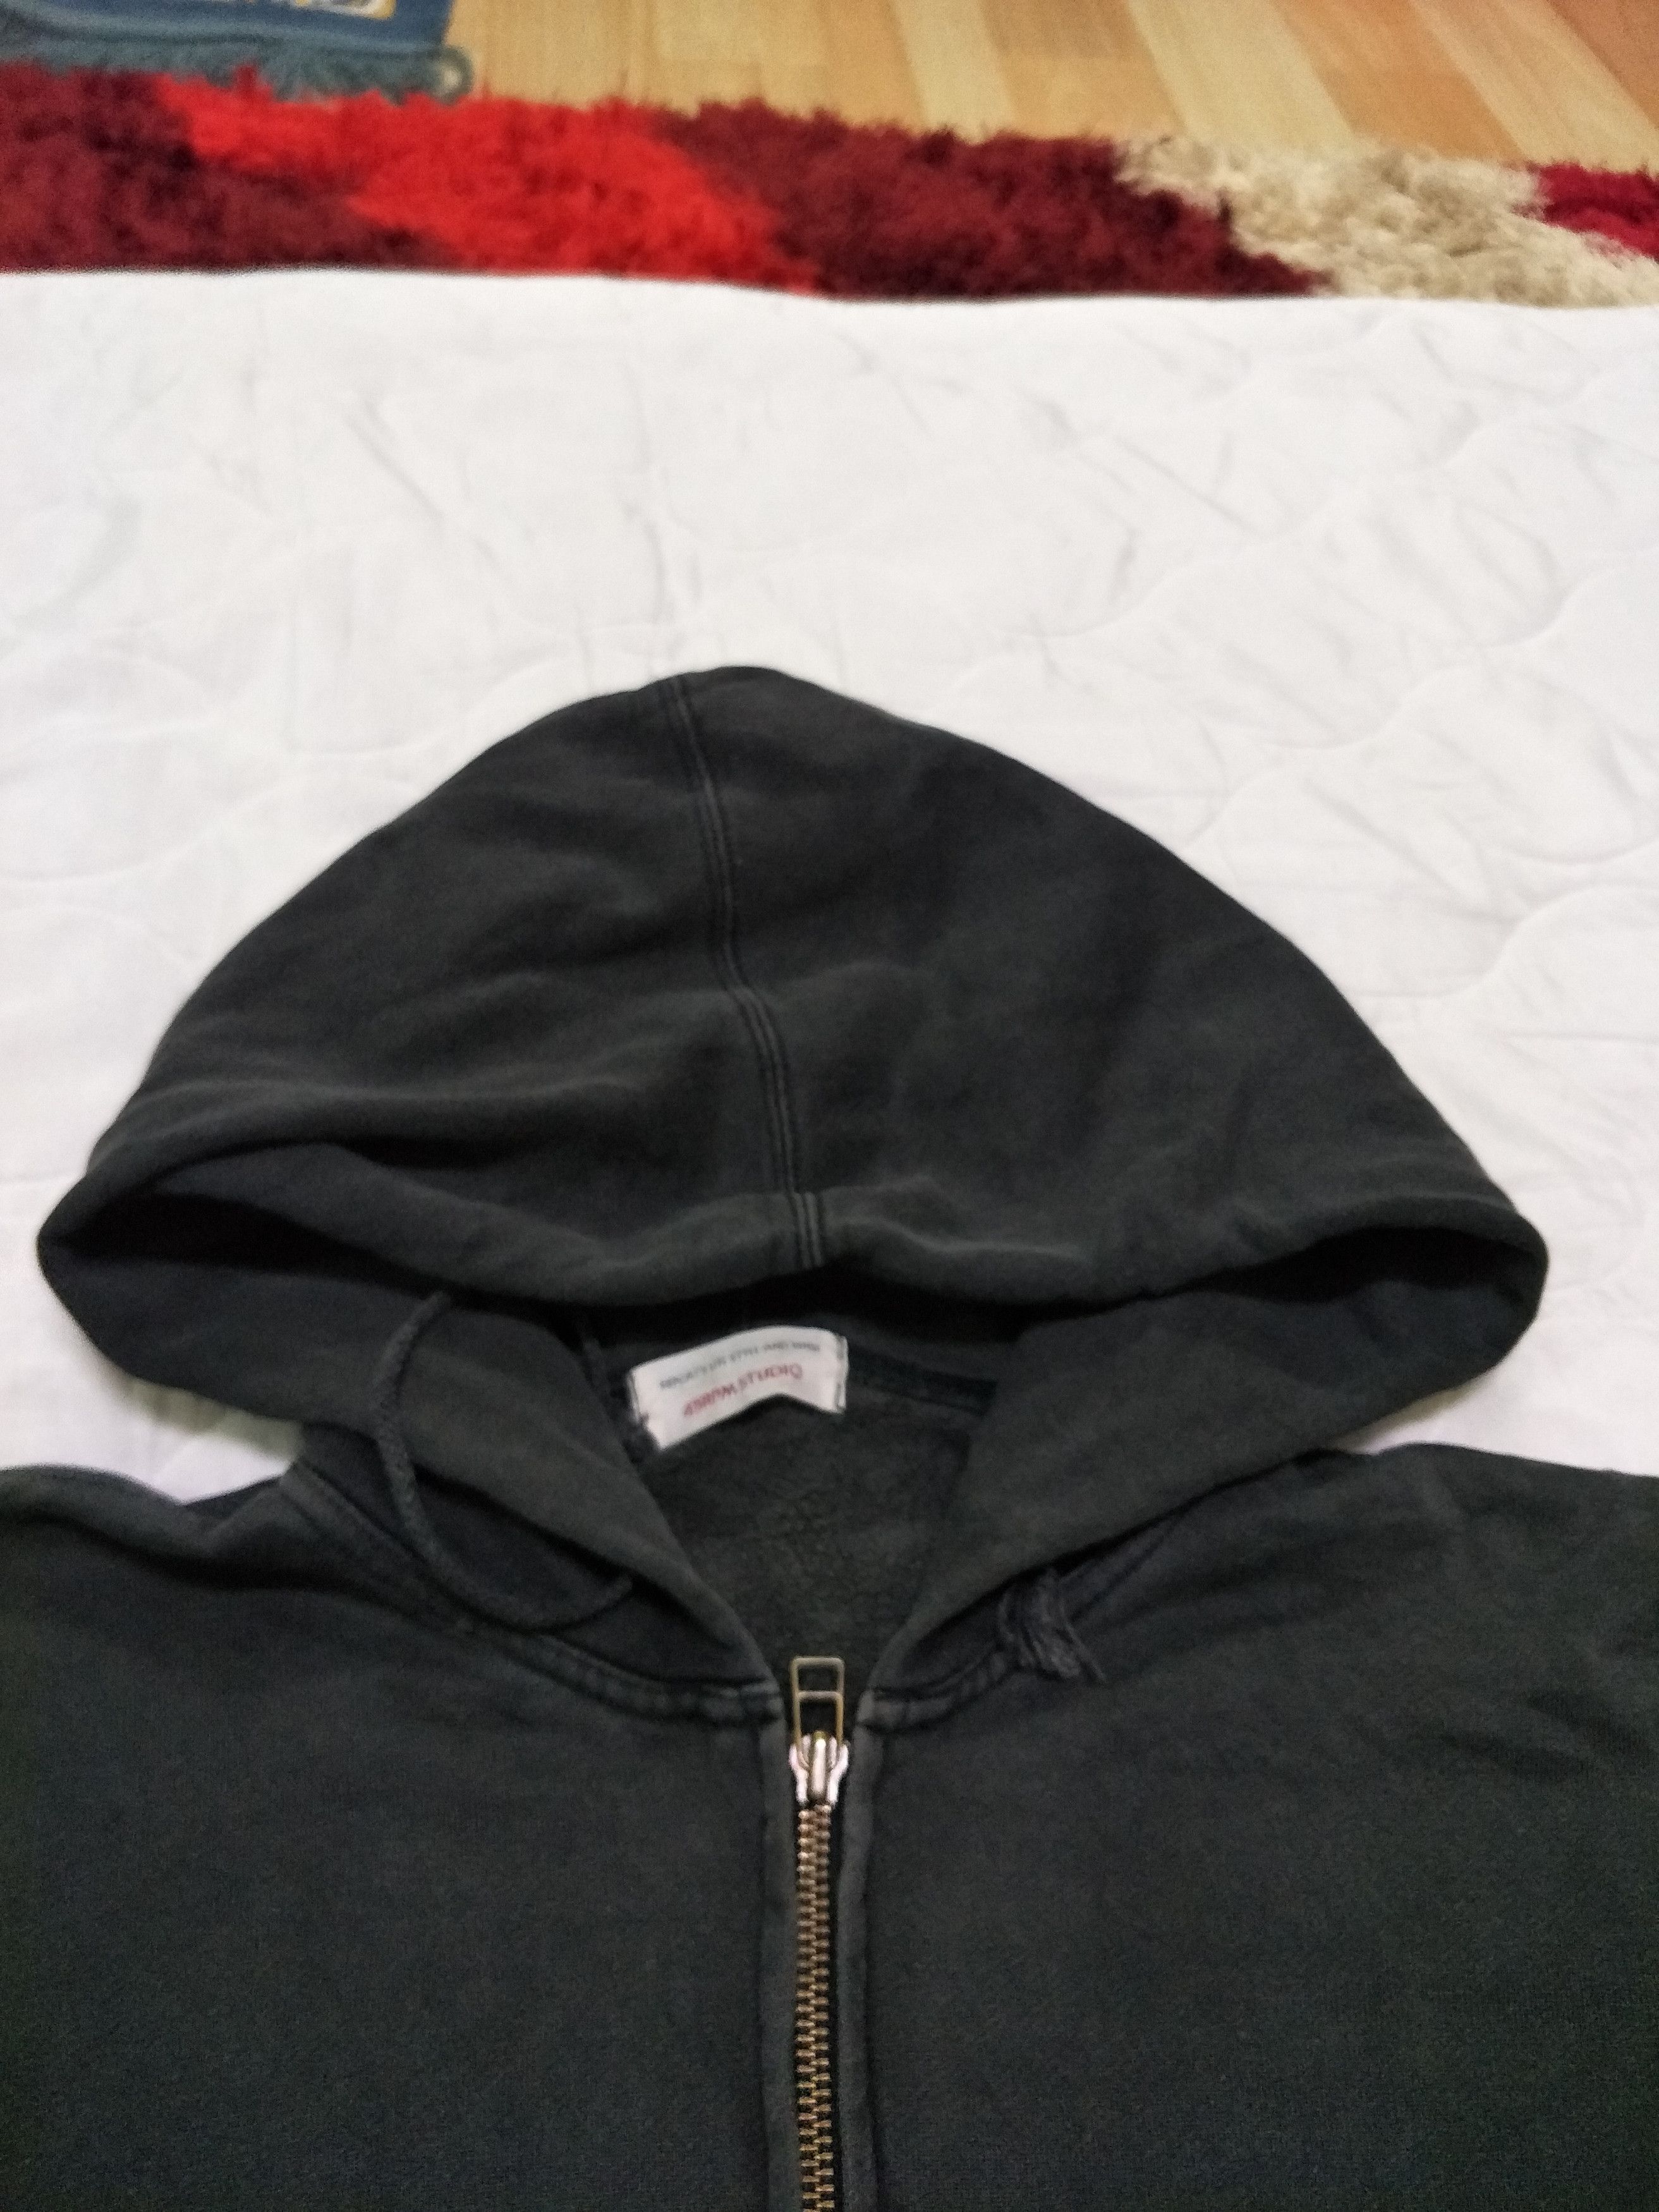 45RPM Sweater Hoodie - 7